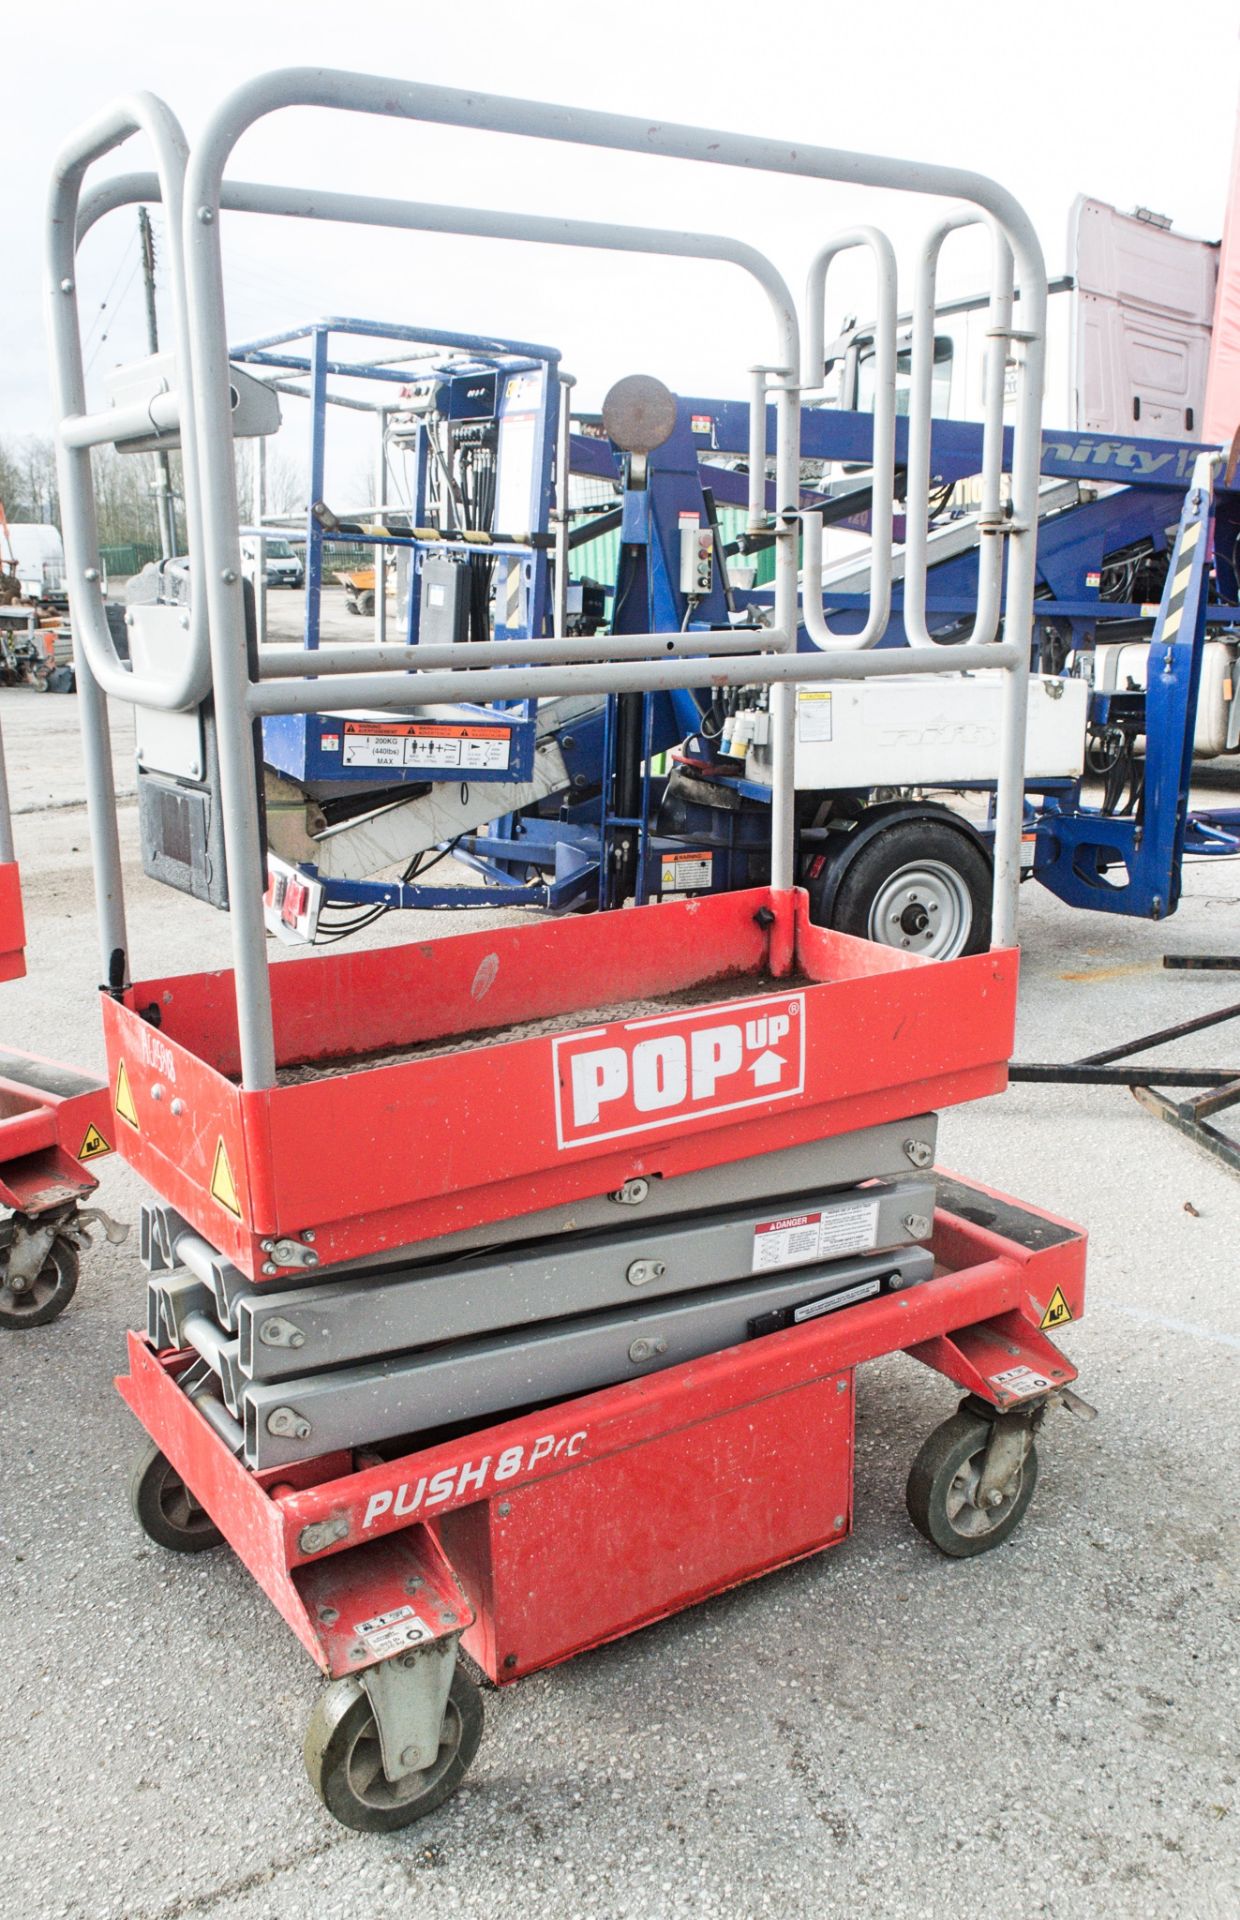 Pop Up Push 8 push around battery electric scissor lift access platform A685818 - Image 2 of 4